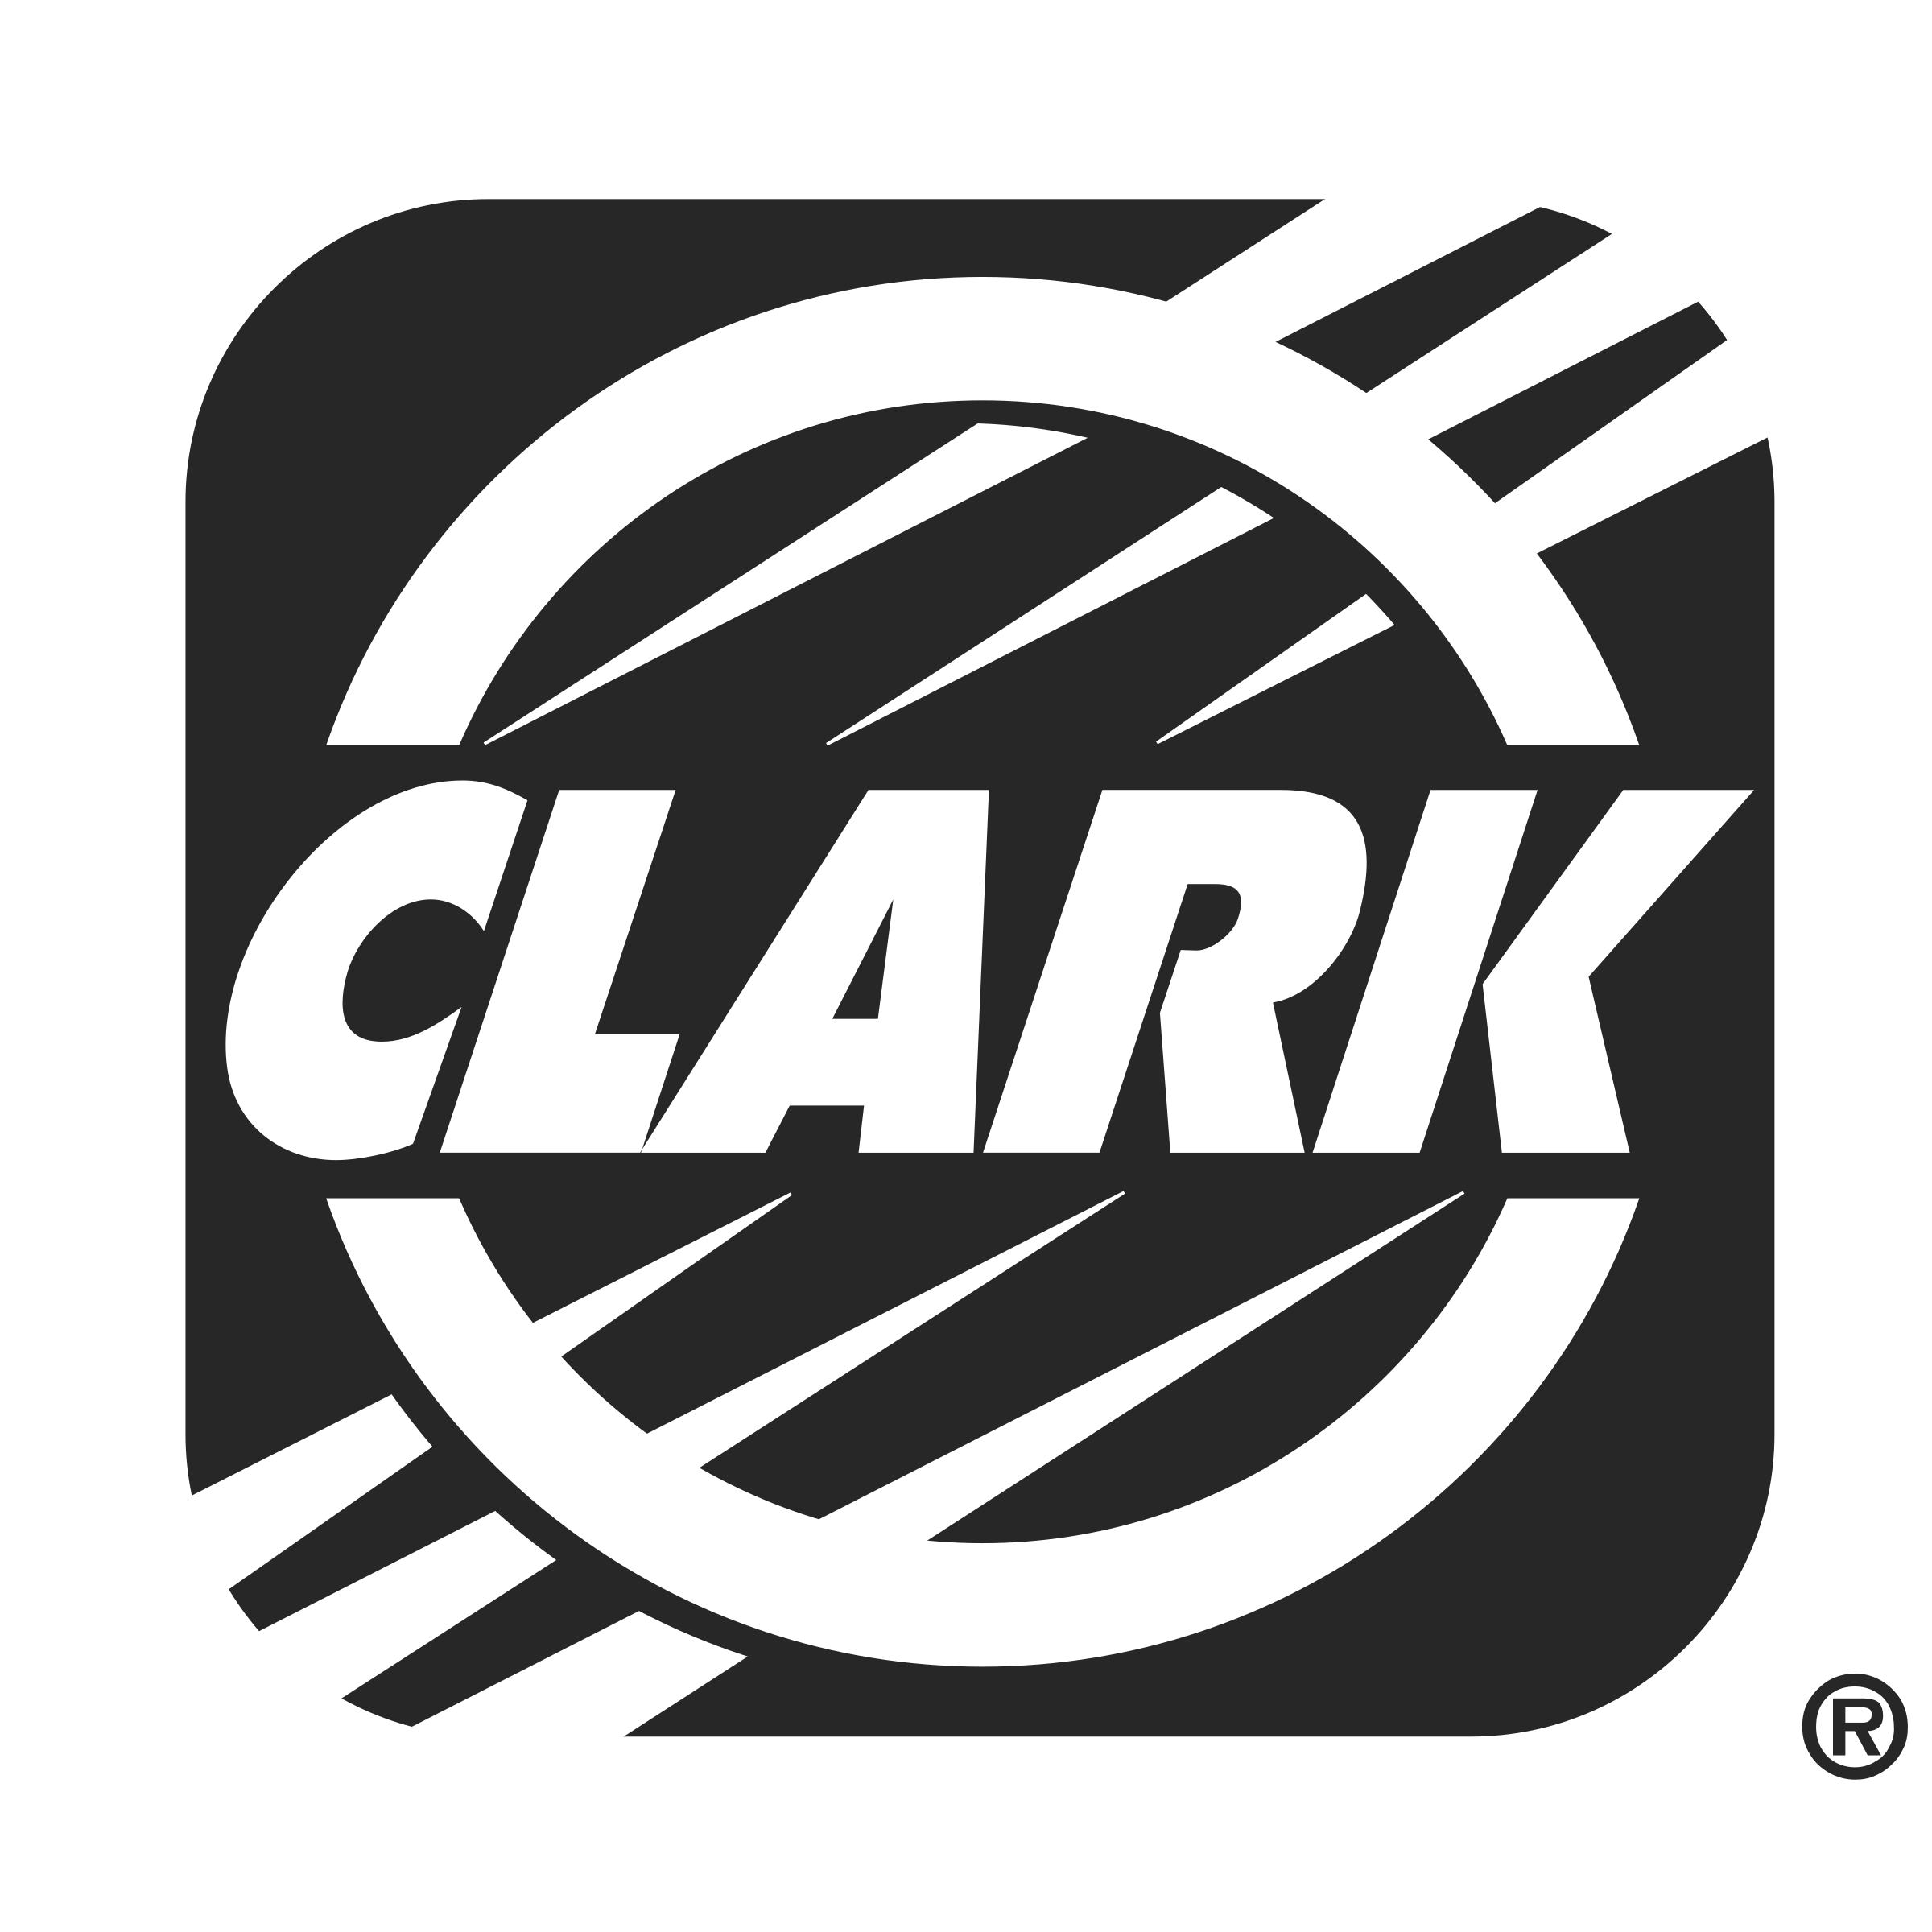 Clark Logo - Clark Retail Logo PNG Transparent & SVG Vector